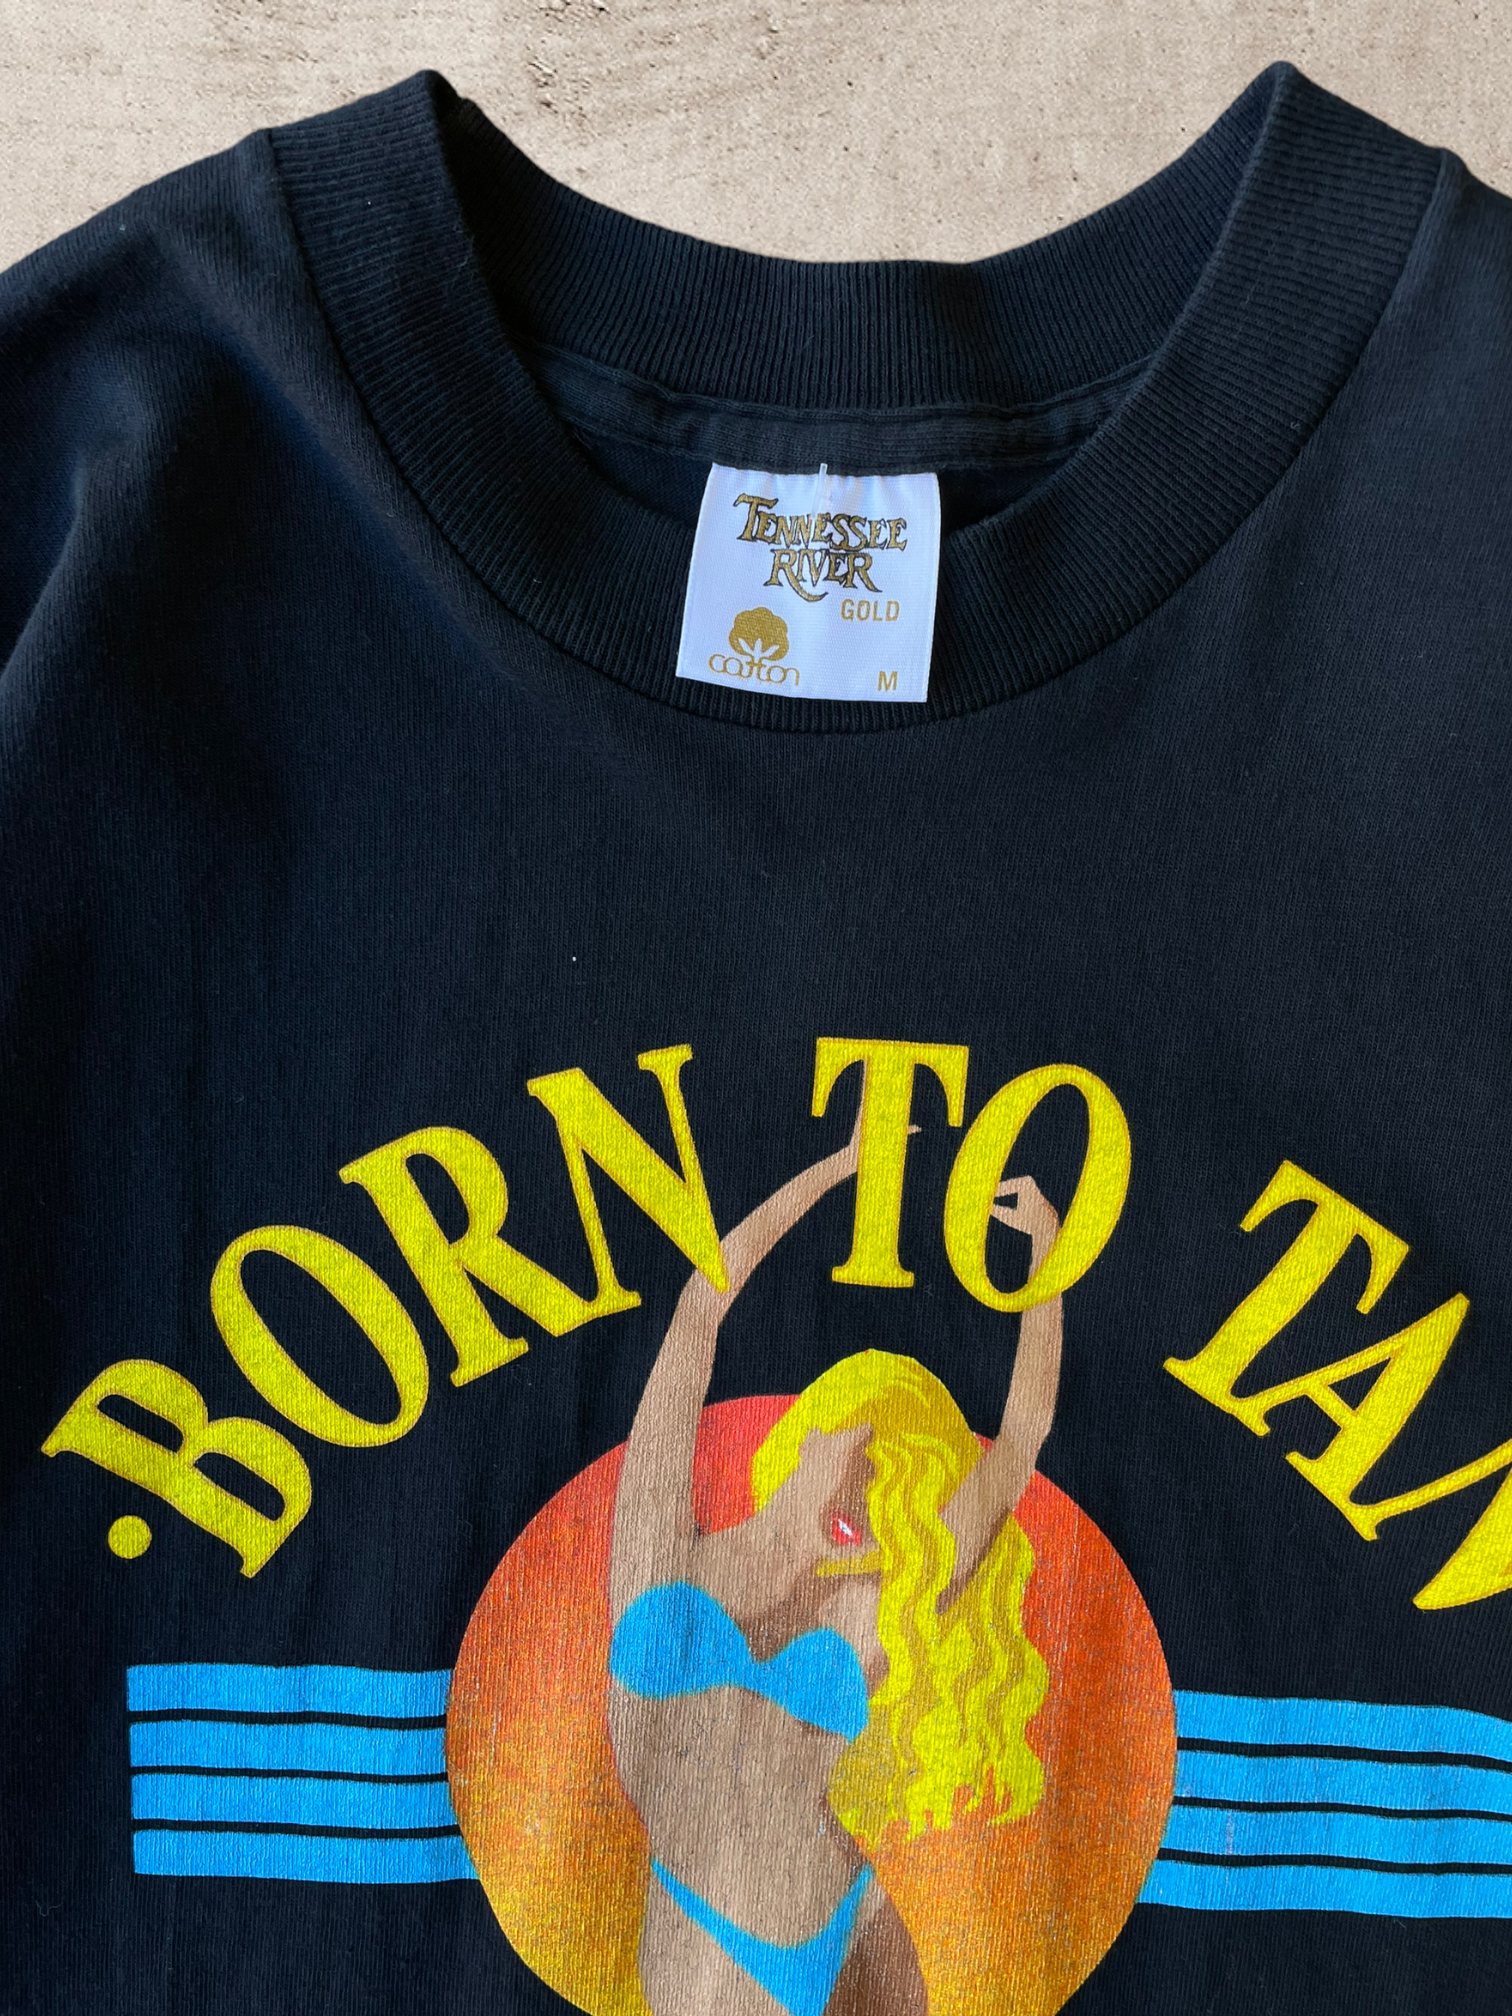 90s Australian Gold Born to Tan T-Shirt - Large